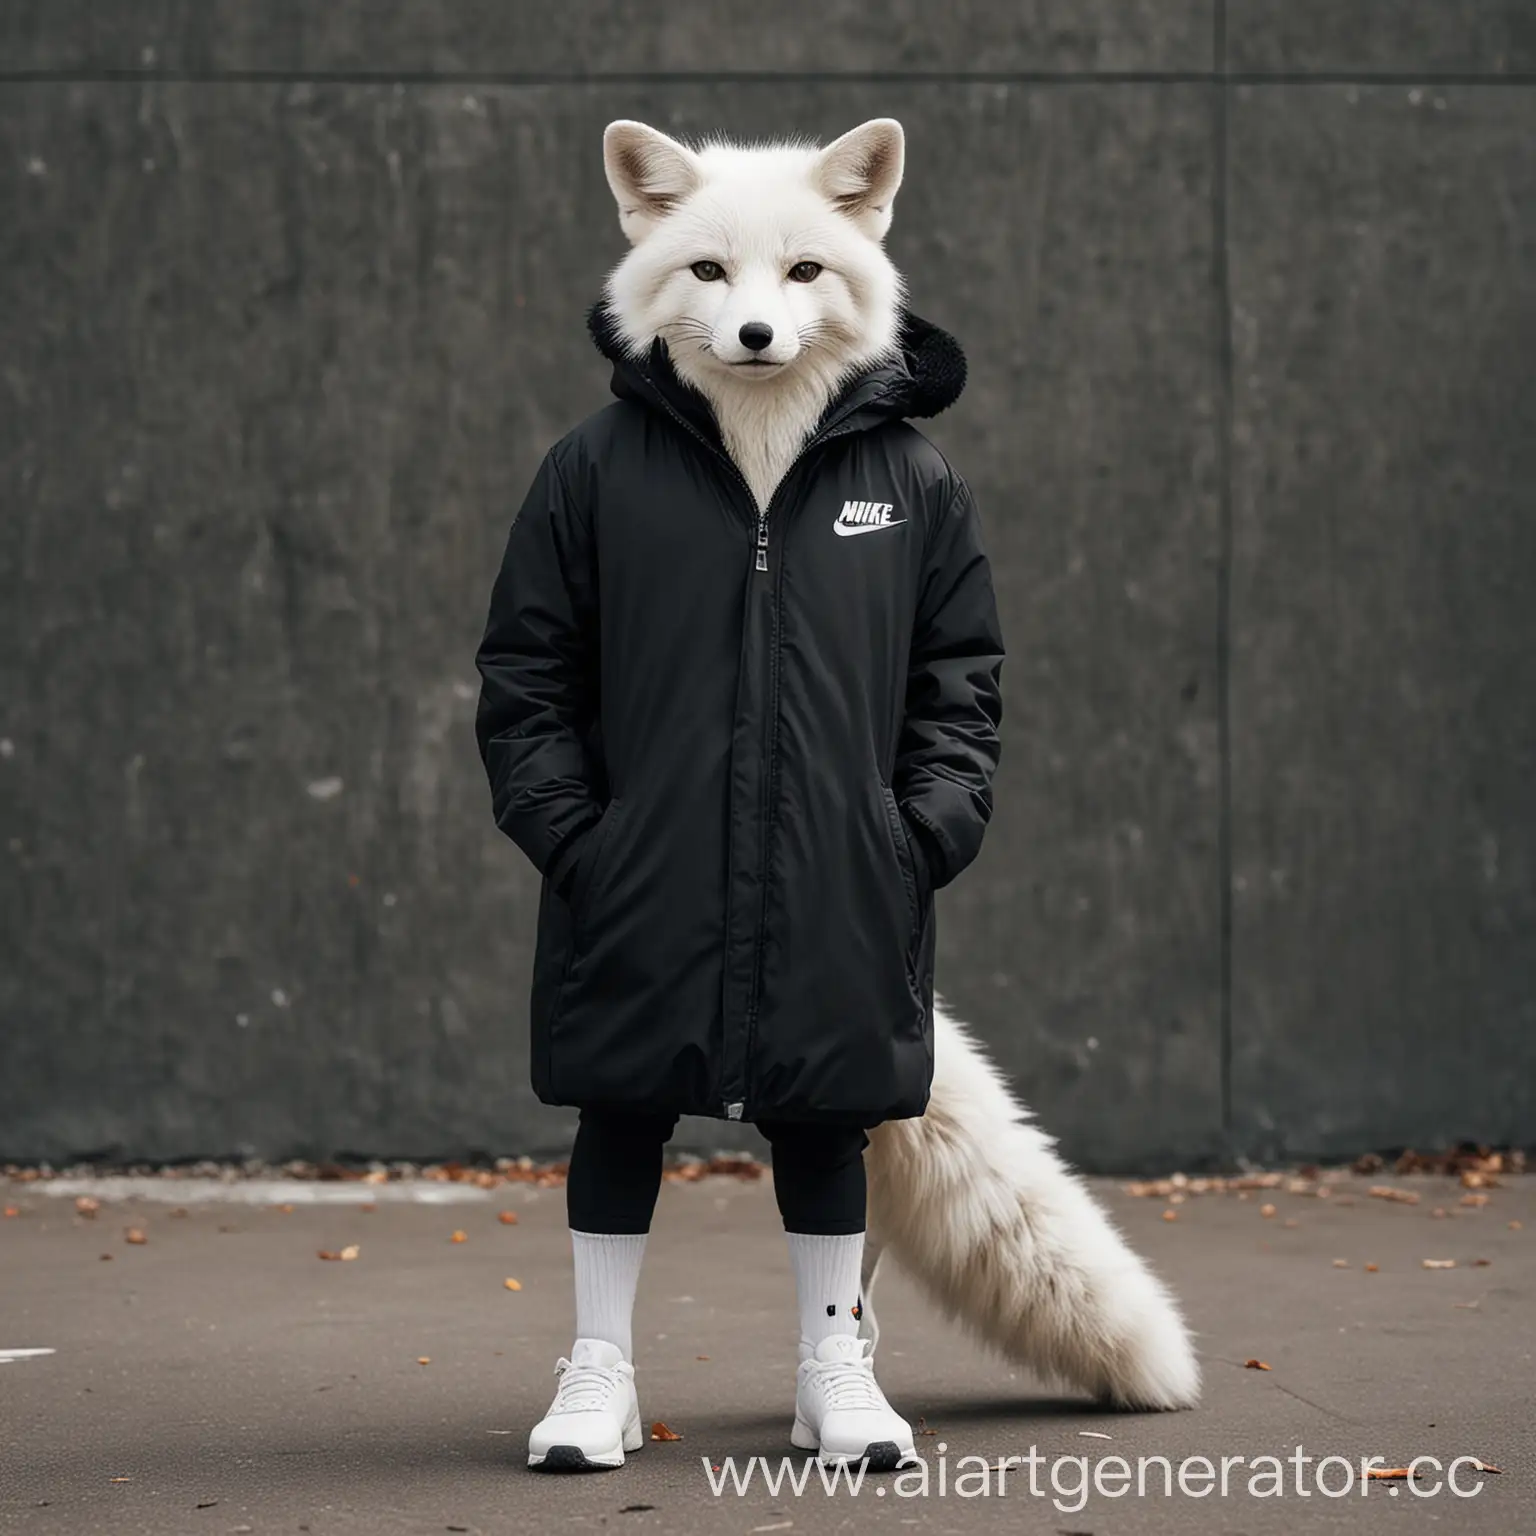 White-Fox-Wearing-Black-Nike-Coat-in-Urban-Setting